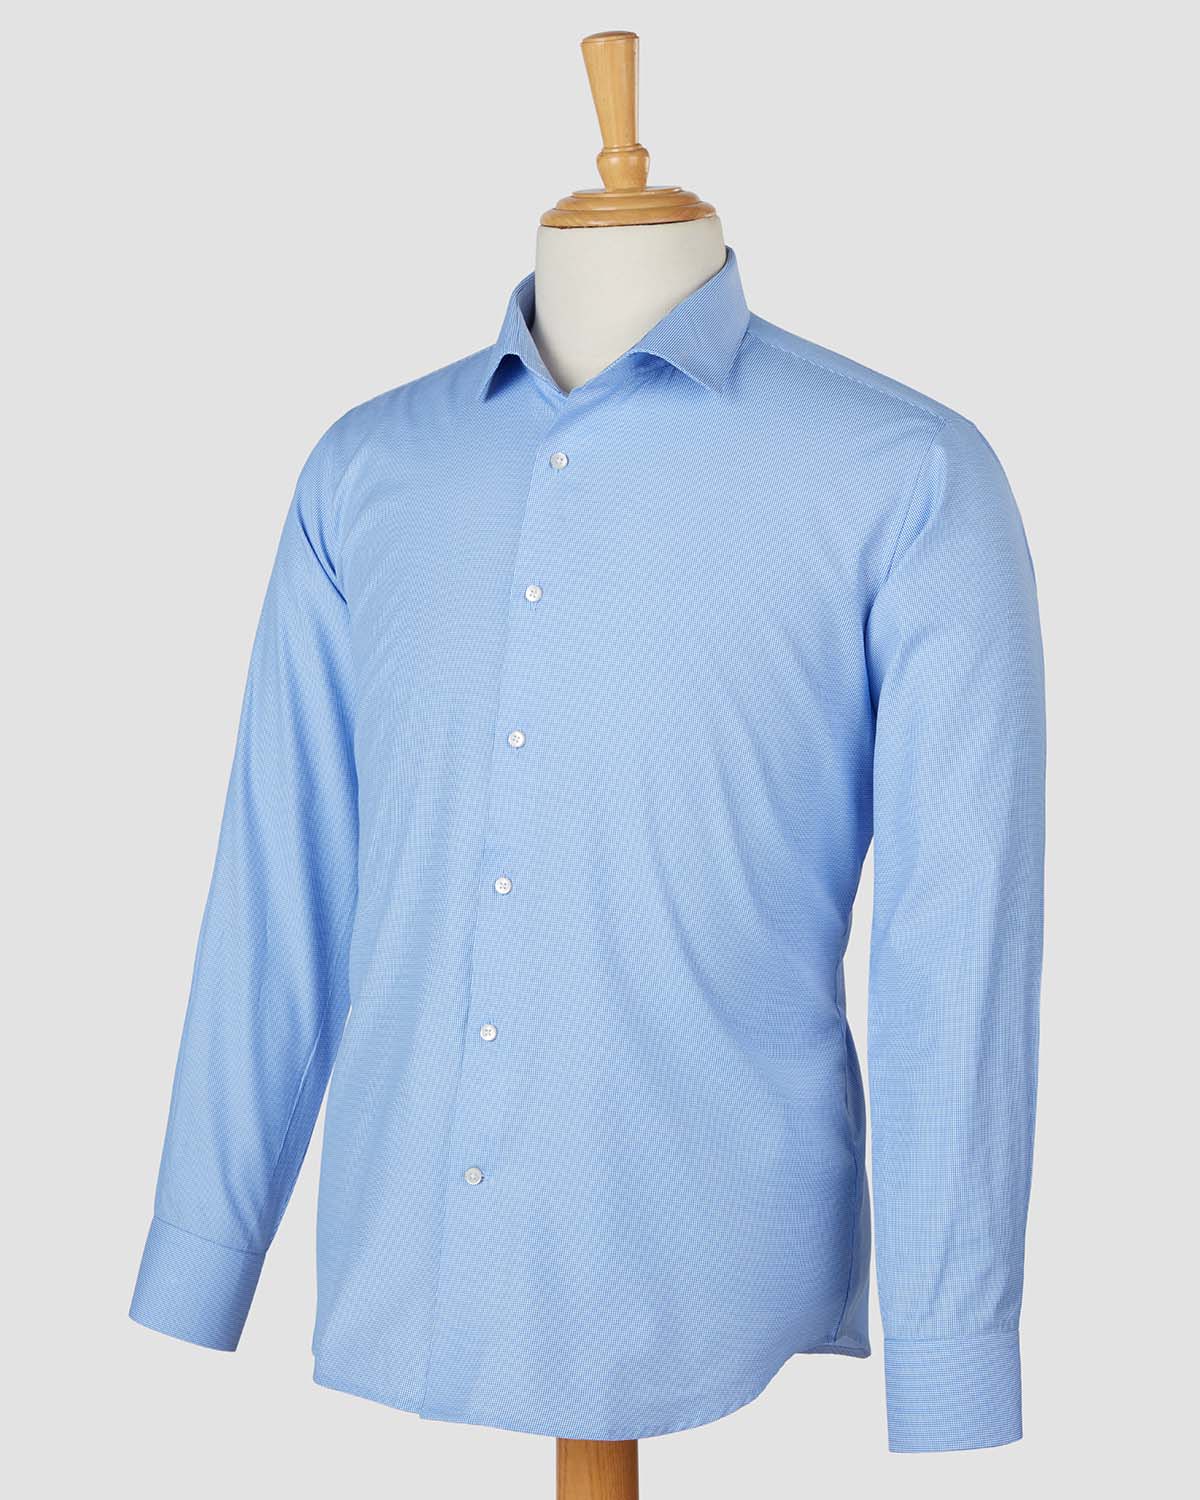 Bombay Shirt Company - Blue Lupine Houndstooth Shirt